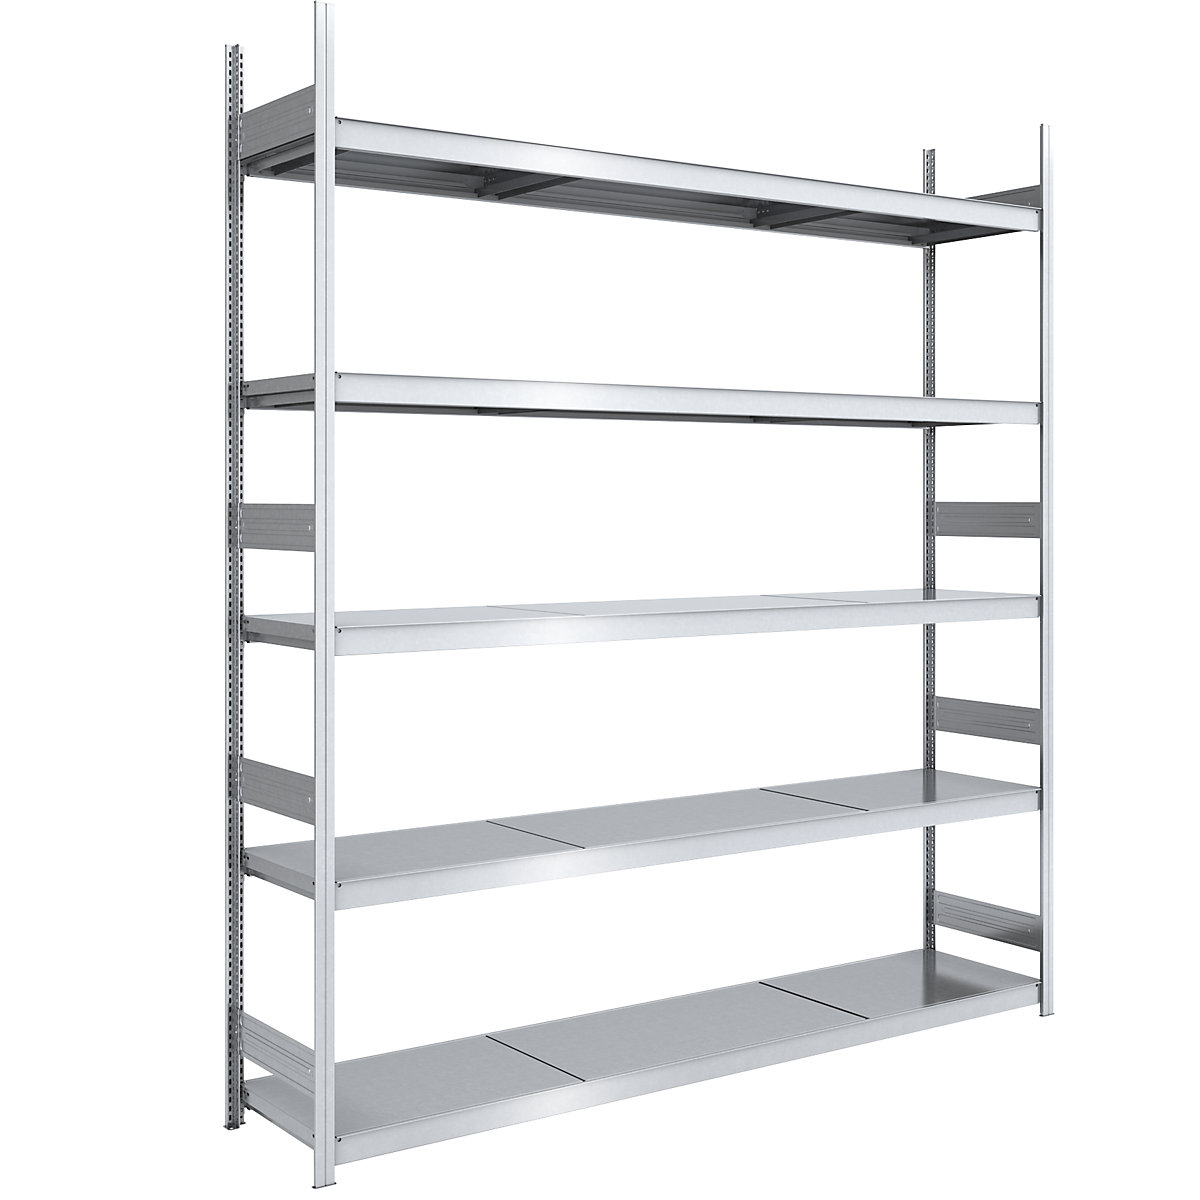 Wide span boltless shelving unit with steel shelves – hofe, height 3000 mm, shelf width 2500 mm, shelf depth 600 mm, standard shelf unit